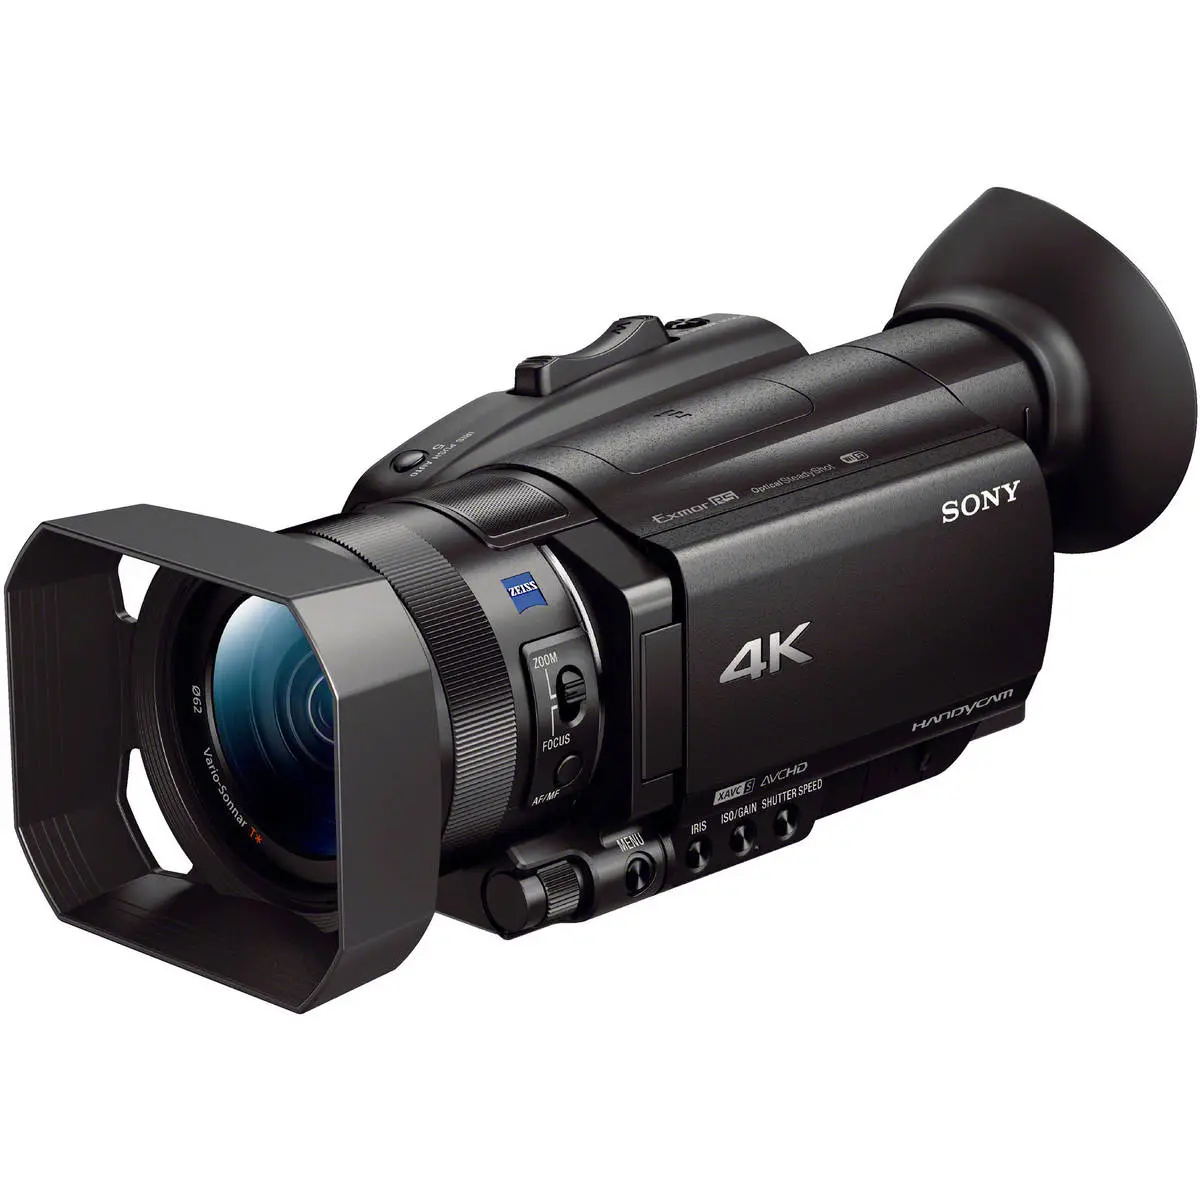 1. Sony FDR-AX700 4K Camcorder PAL